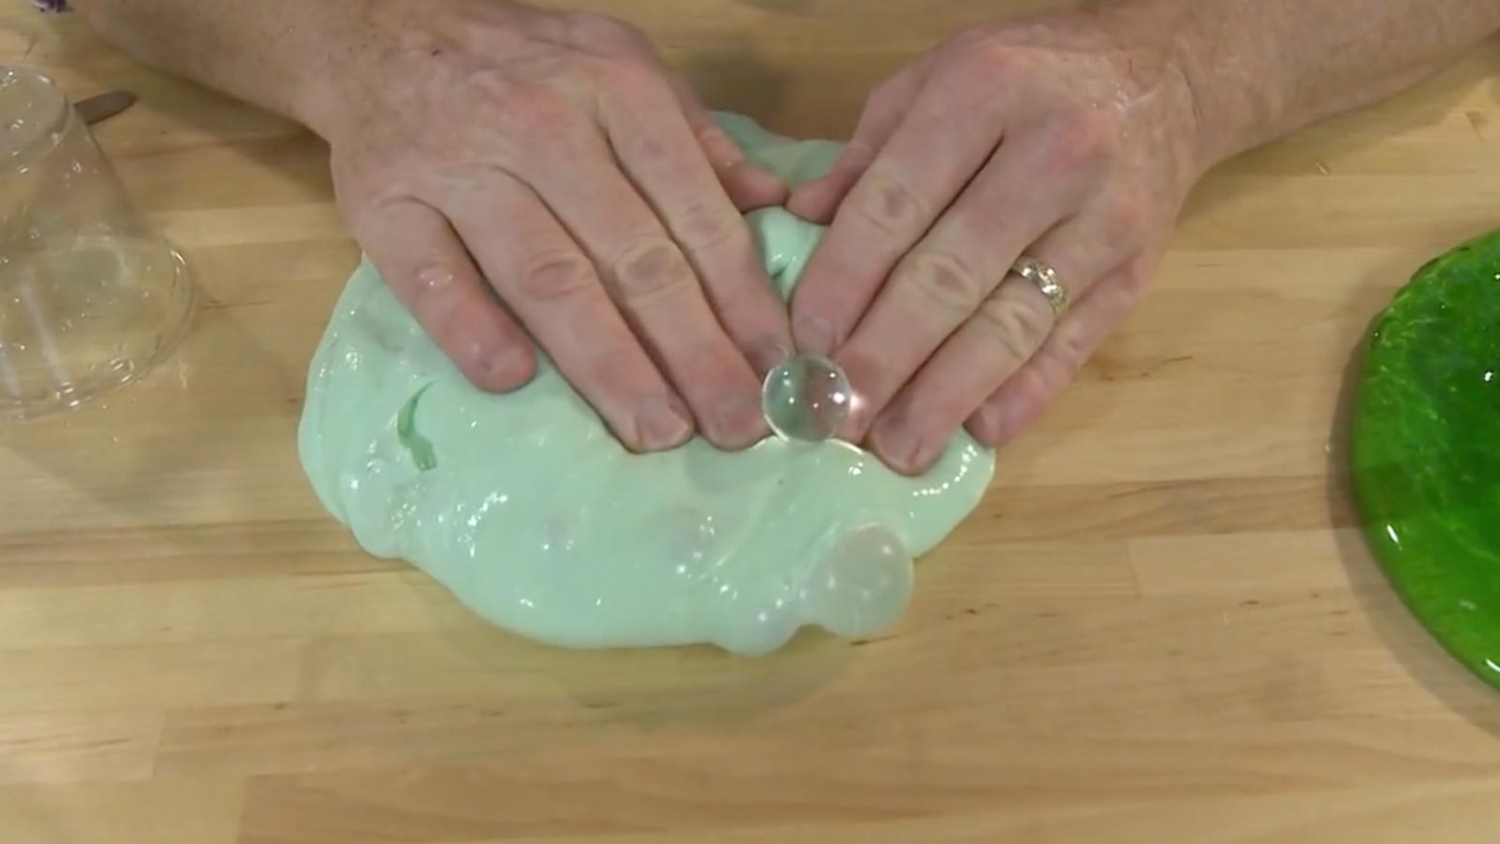 How to Make Gooey Green Slime Using Elmer's Glue and Borax « Science  Experiments :: WonderHowTo